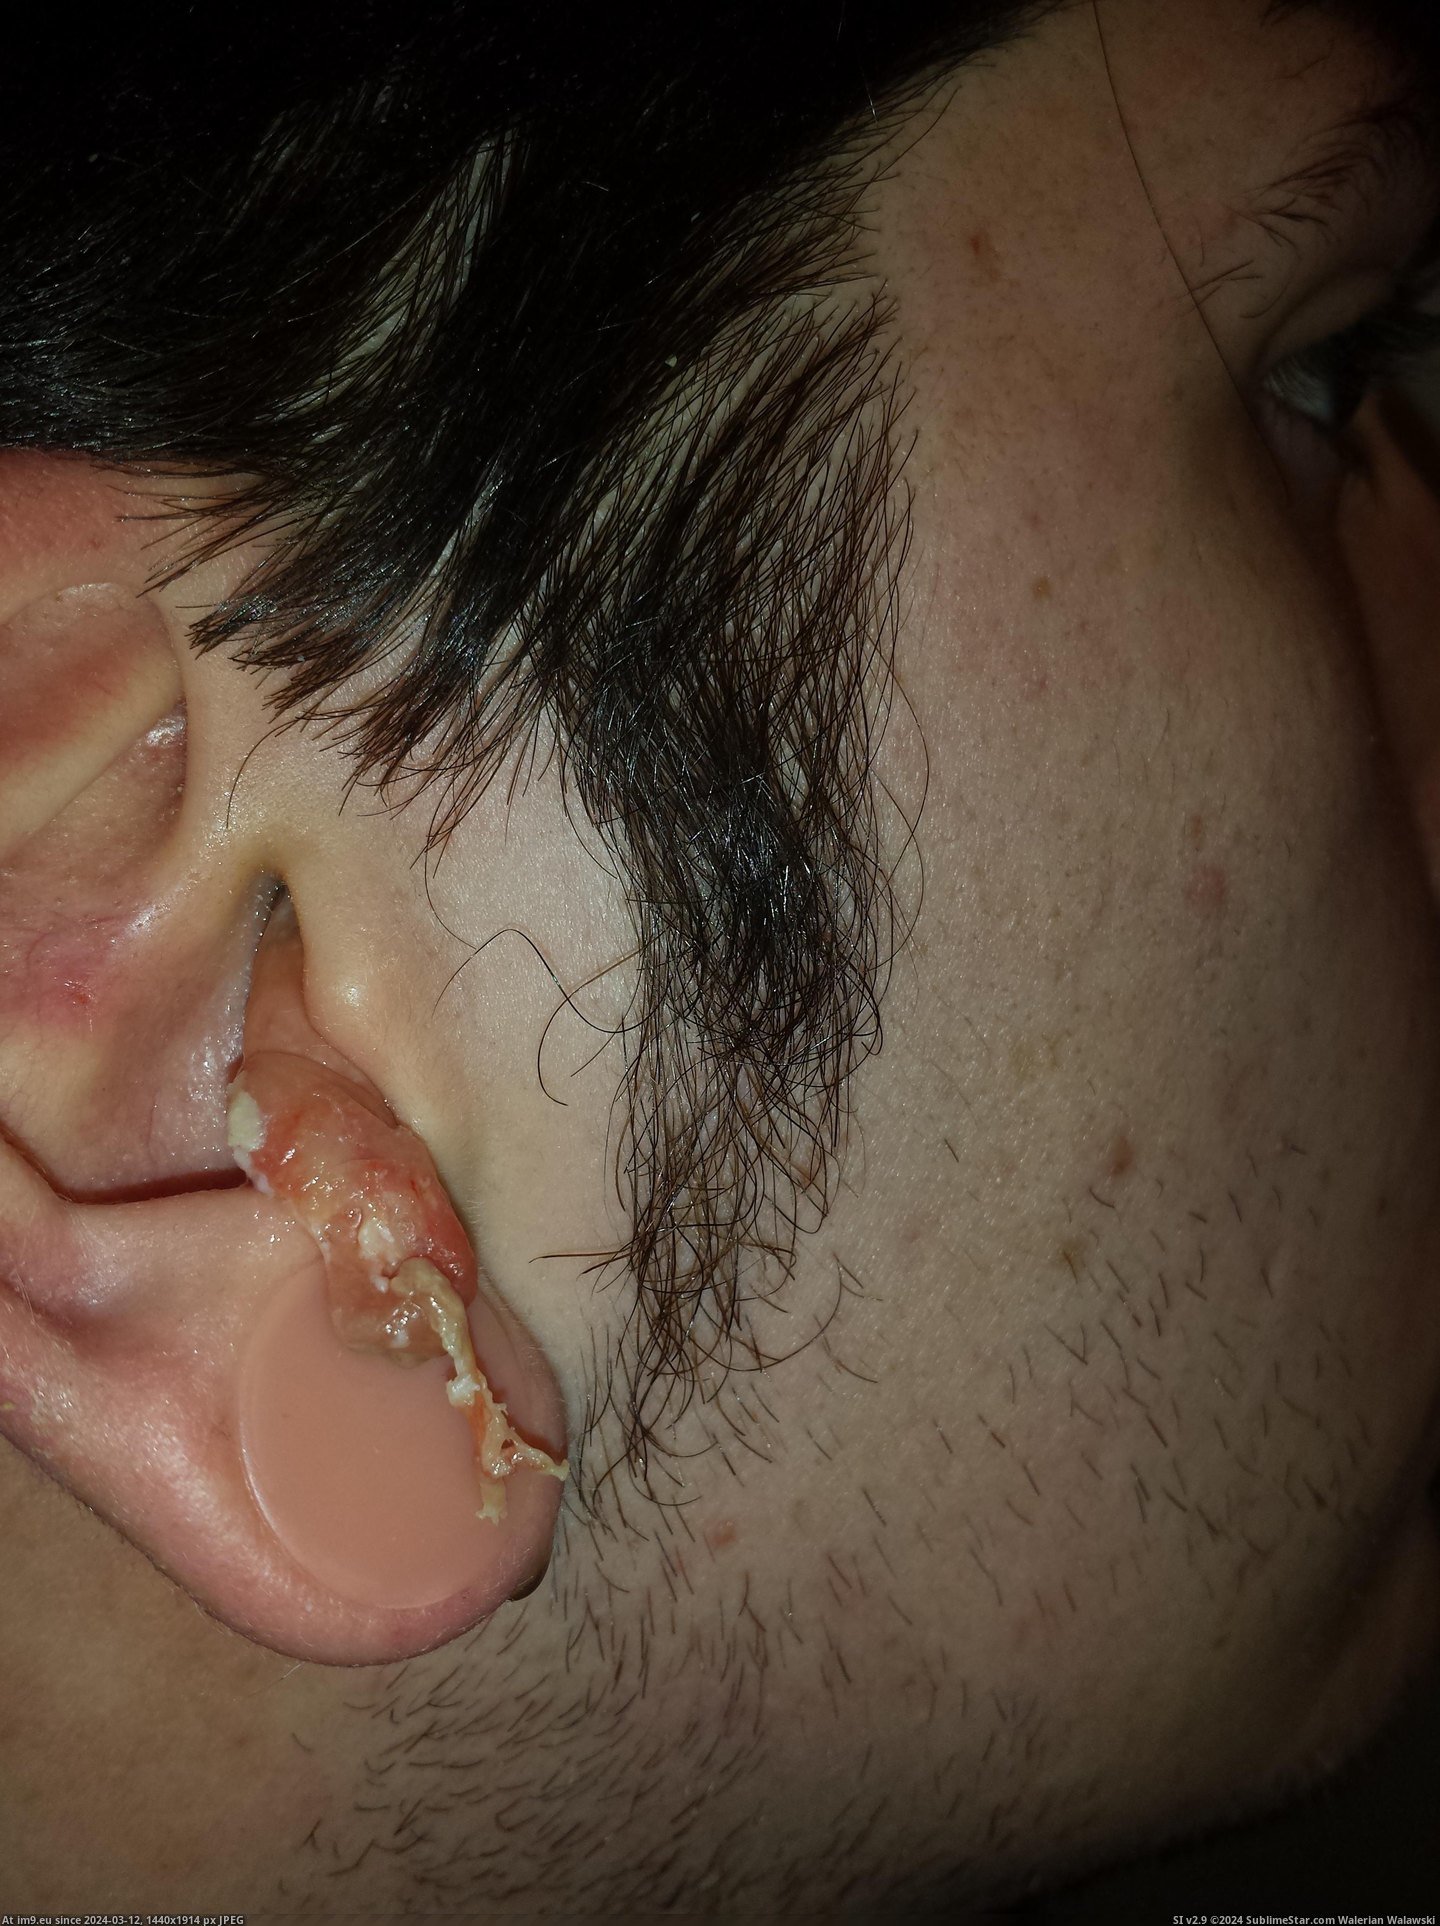 #Wtf #Ear #Infection #Crazy [Wtf] My crazy ear infection 9 Pic. (Bild von album My r/WTF favs))